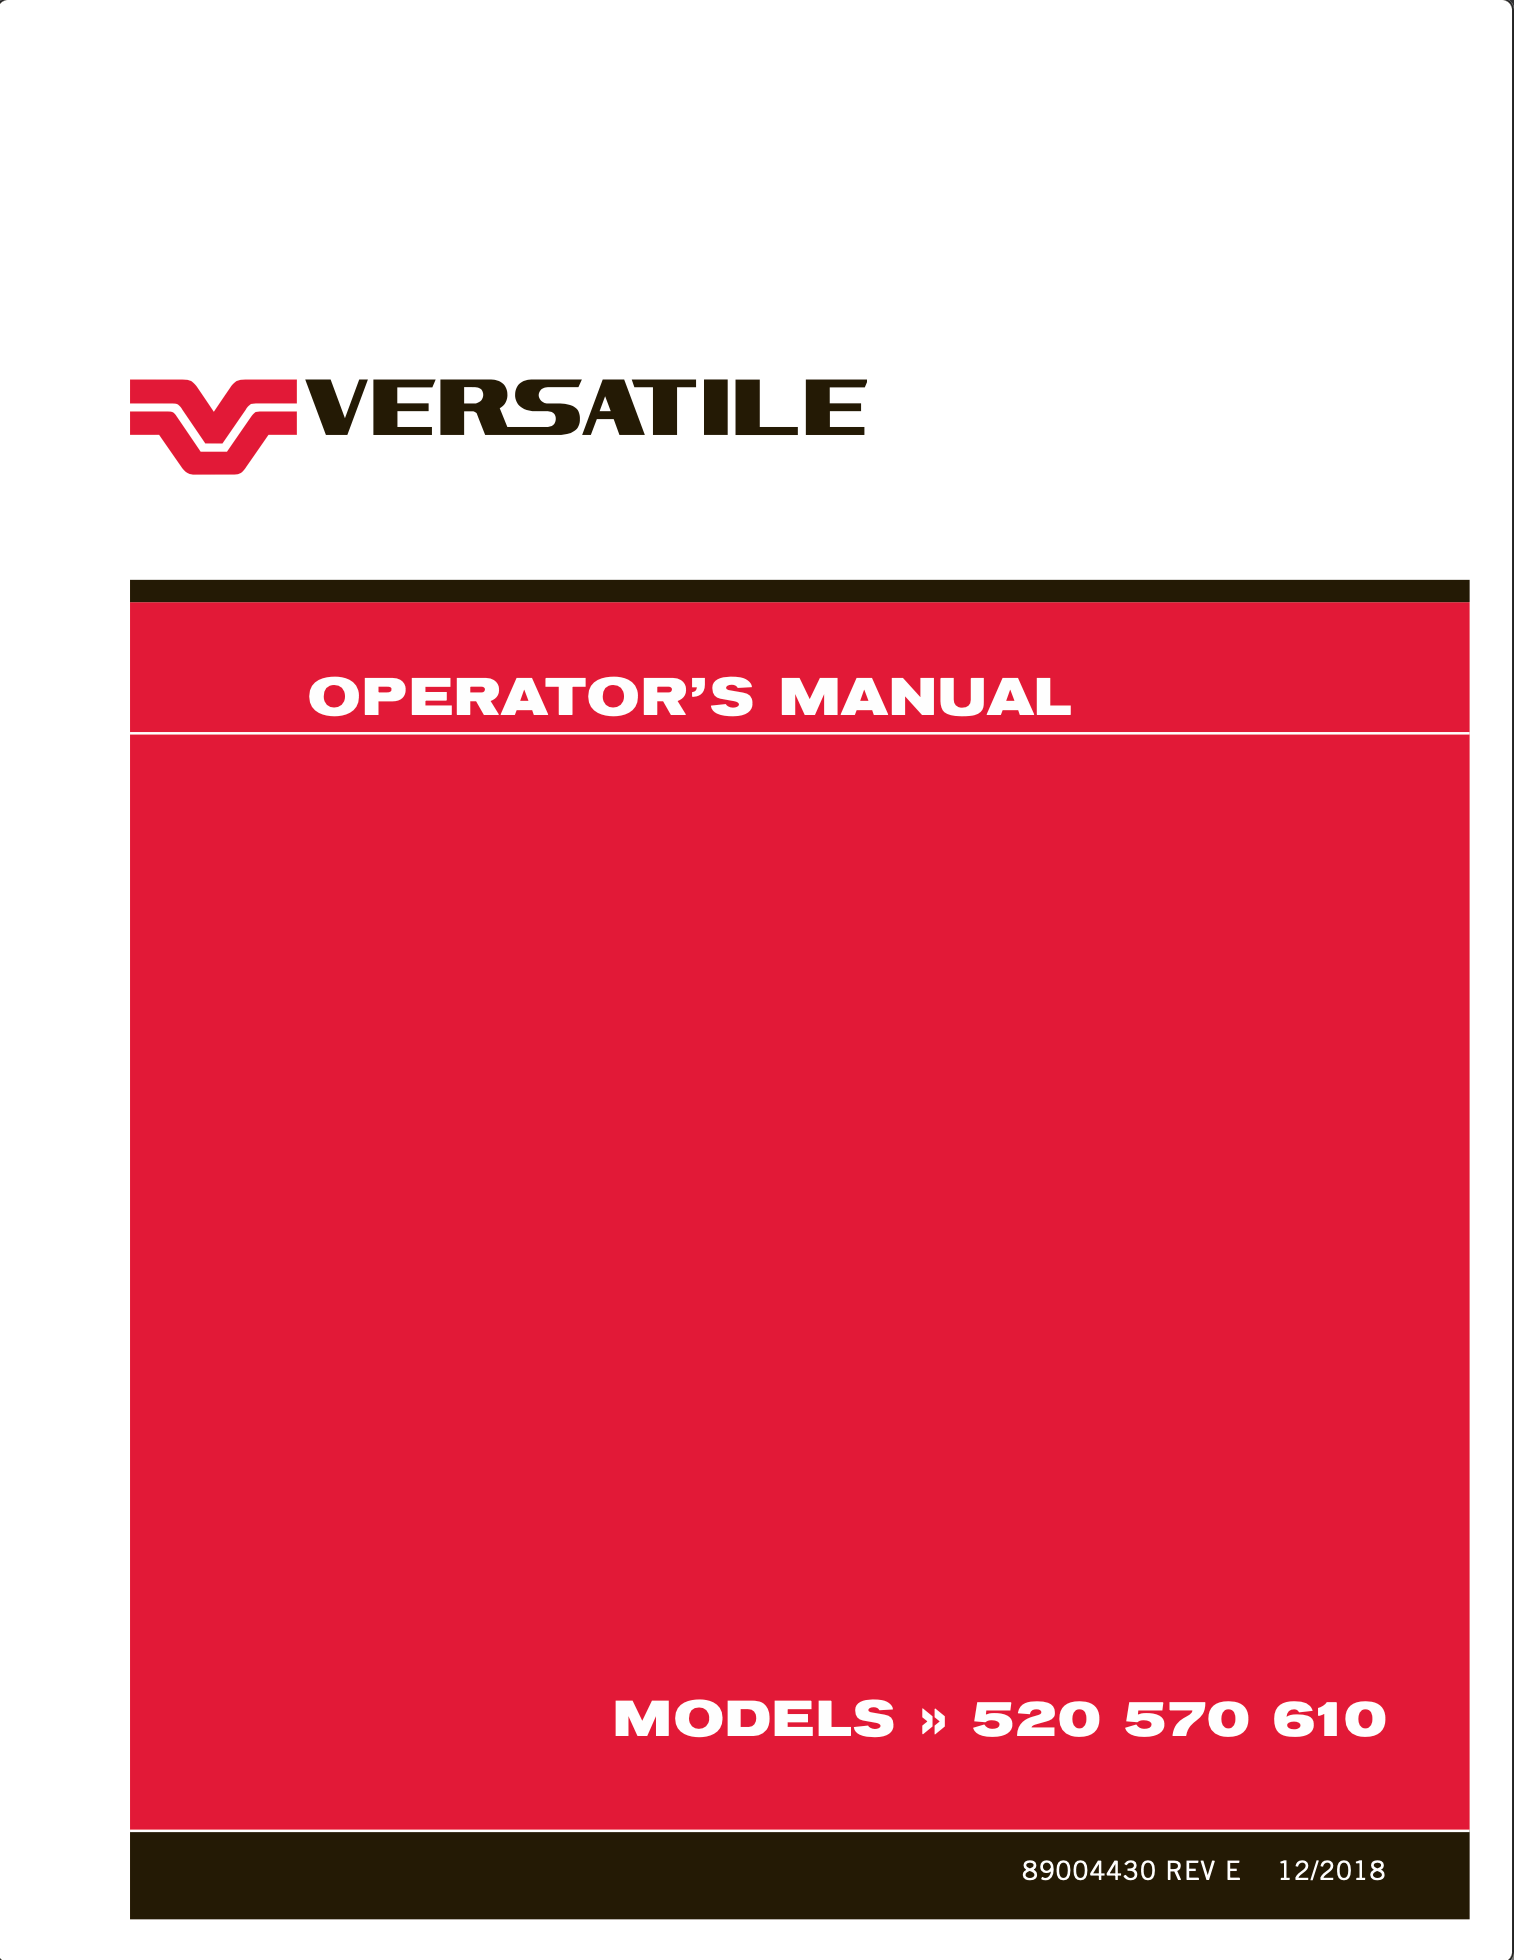 Operator's manual translation